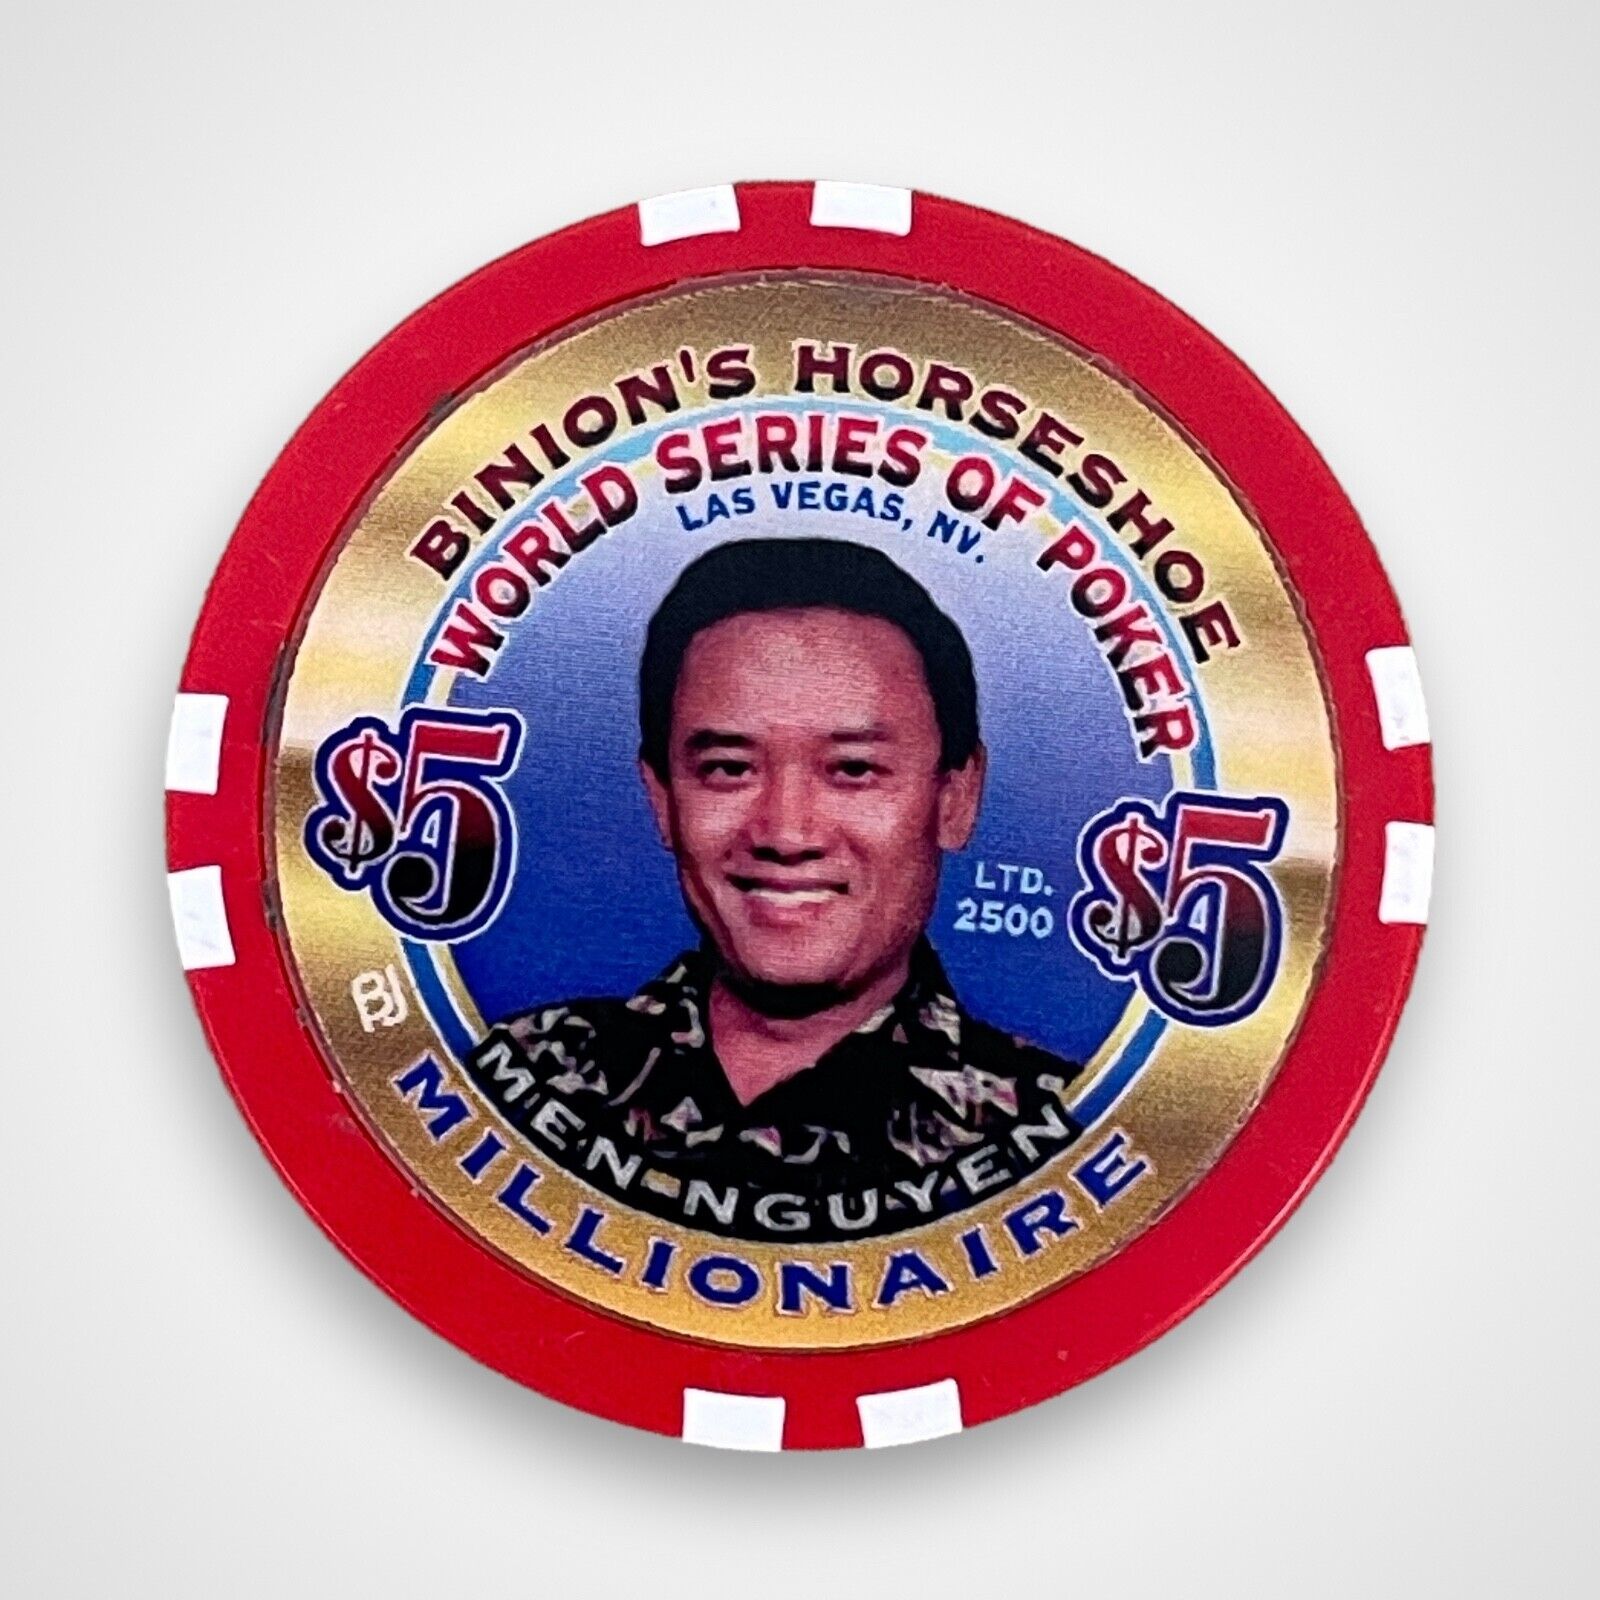 Binion's Horseshoe World Series of Poker Millionaire $5 Poker Chip MEN NGUYEN